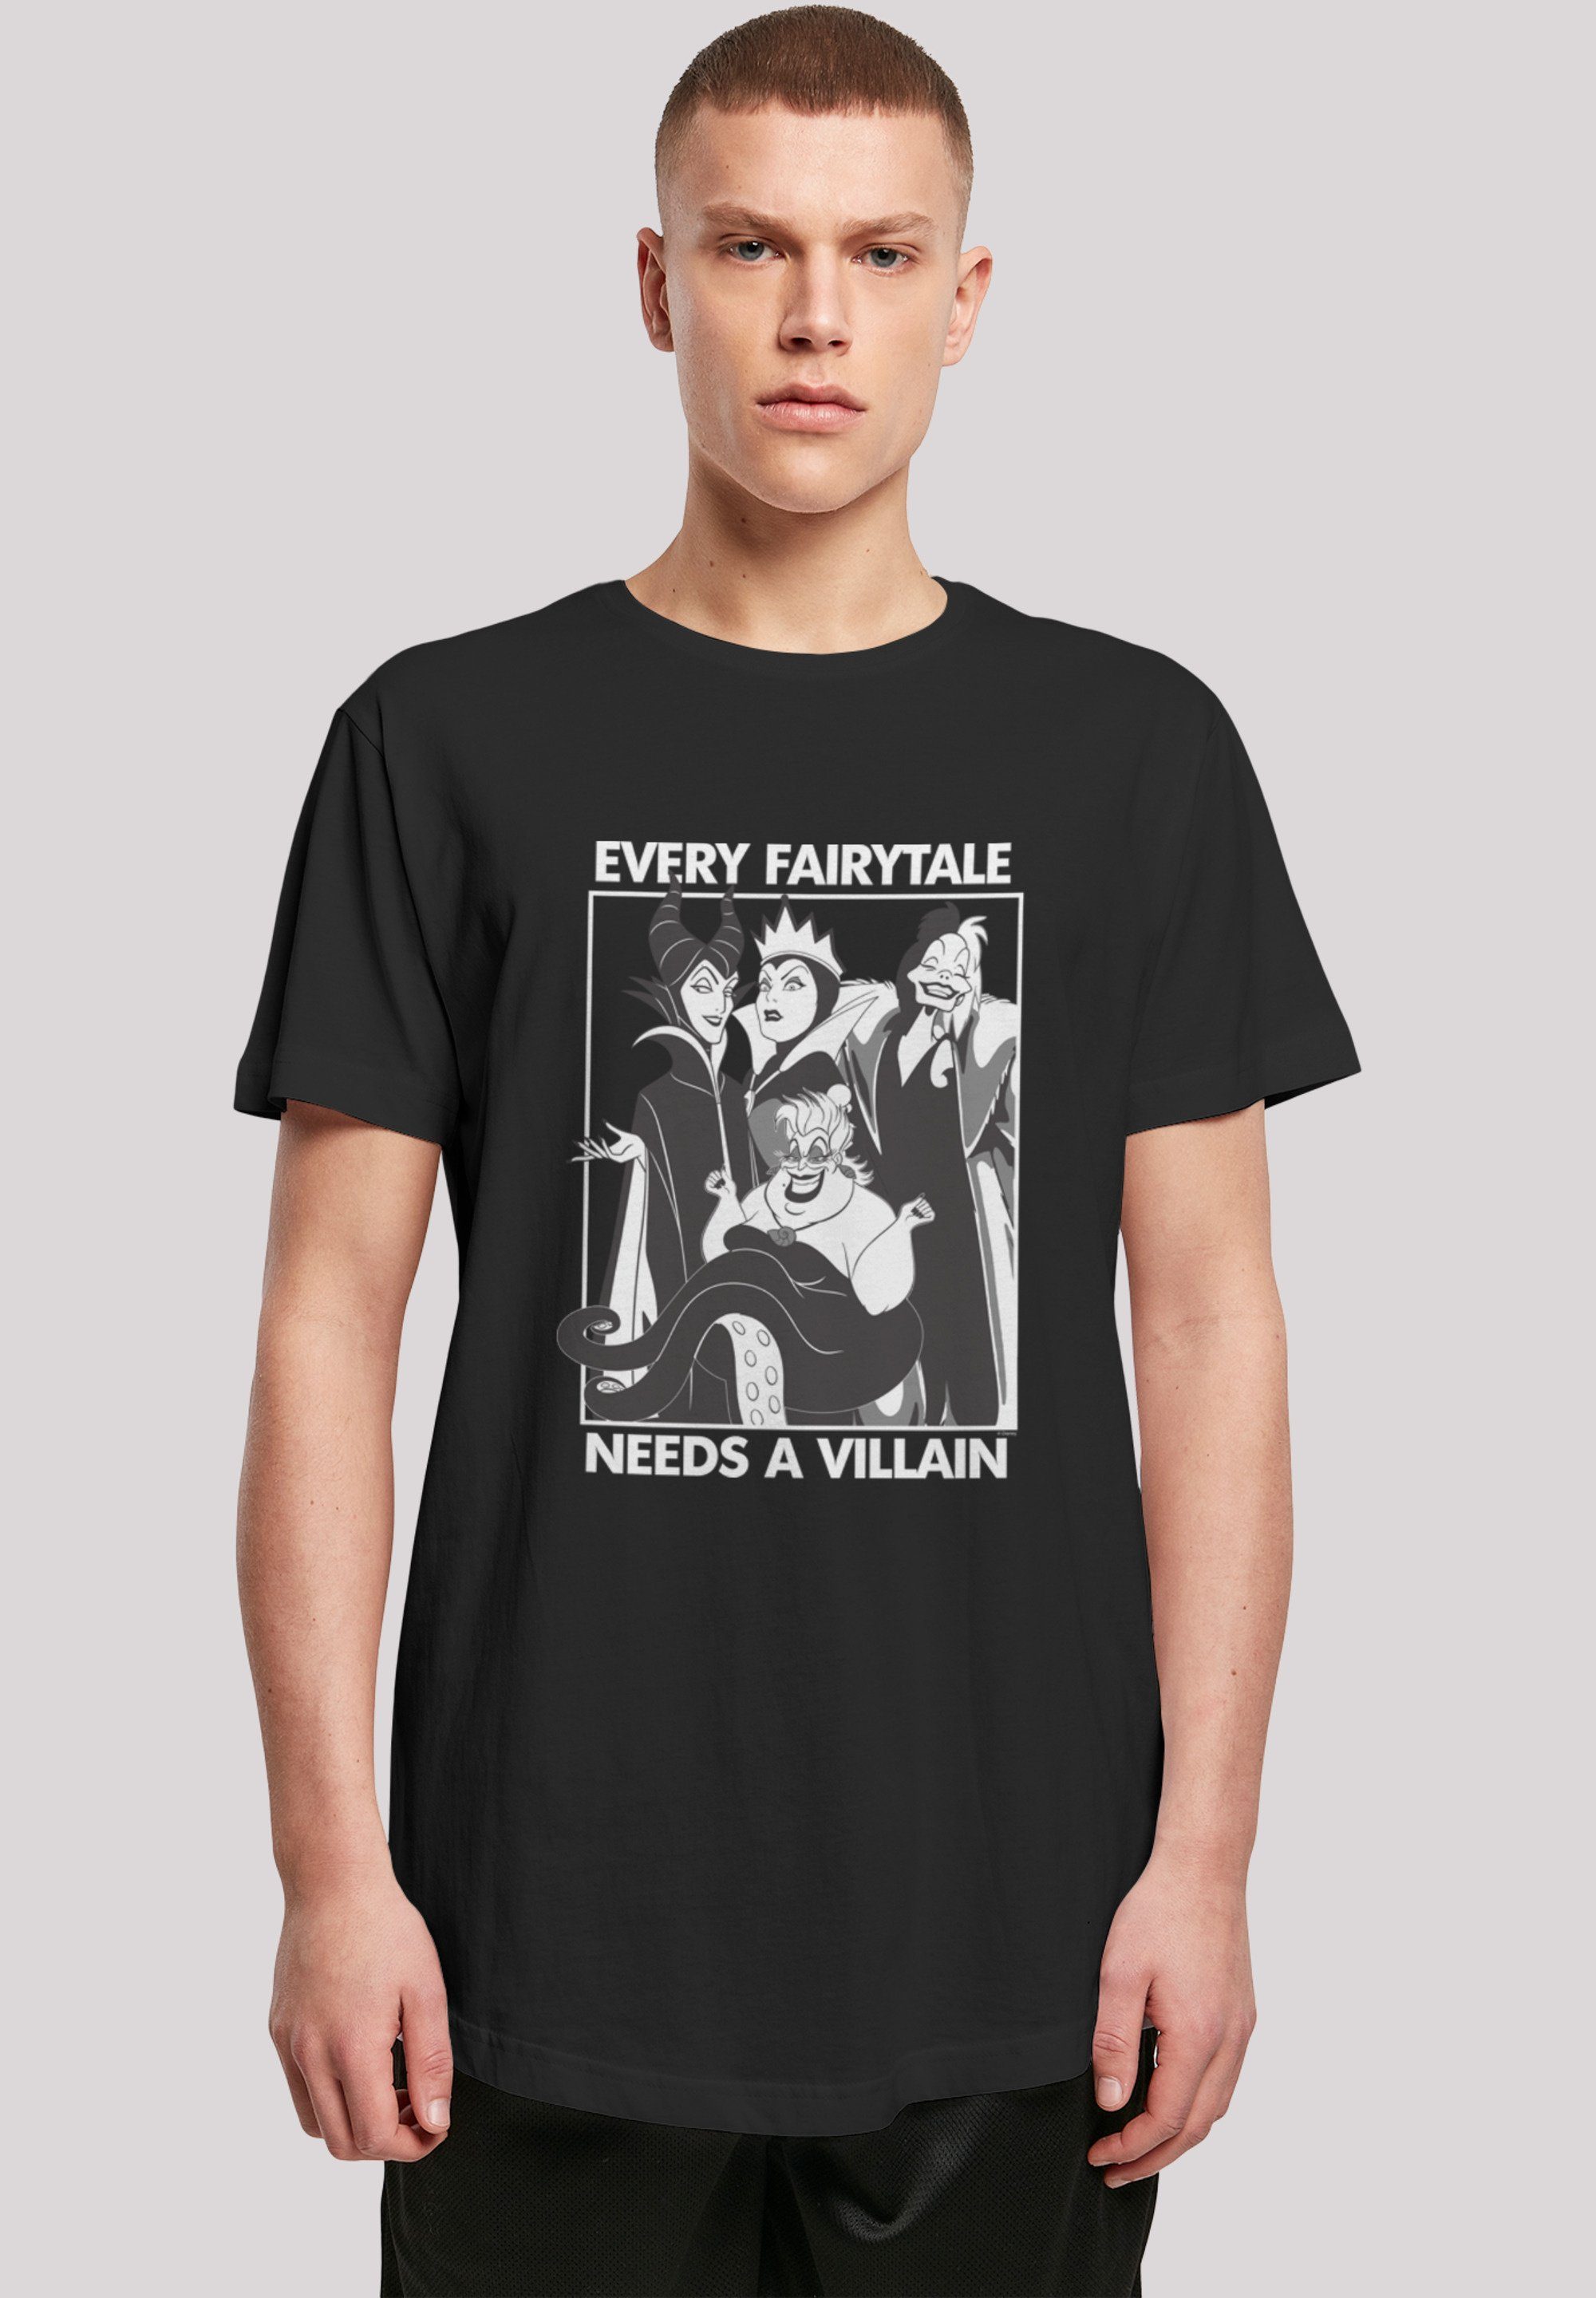 Fairy Needs T-Shirt Every F4NT4STIC Tale Print Villain' A